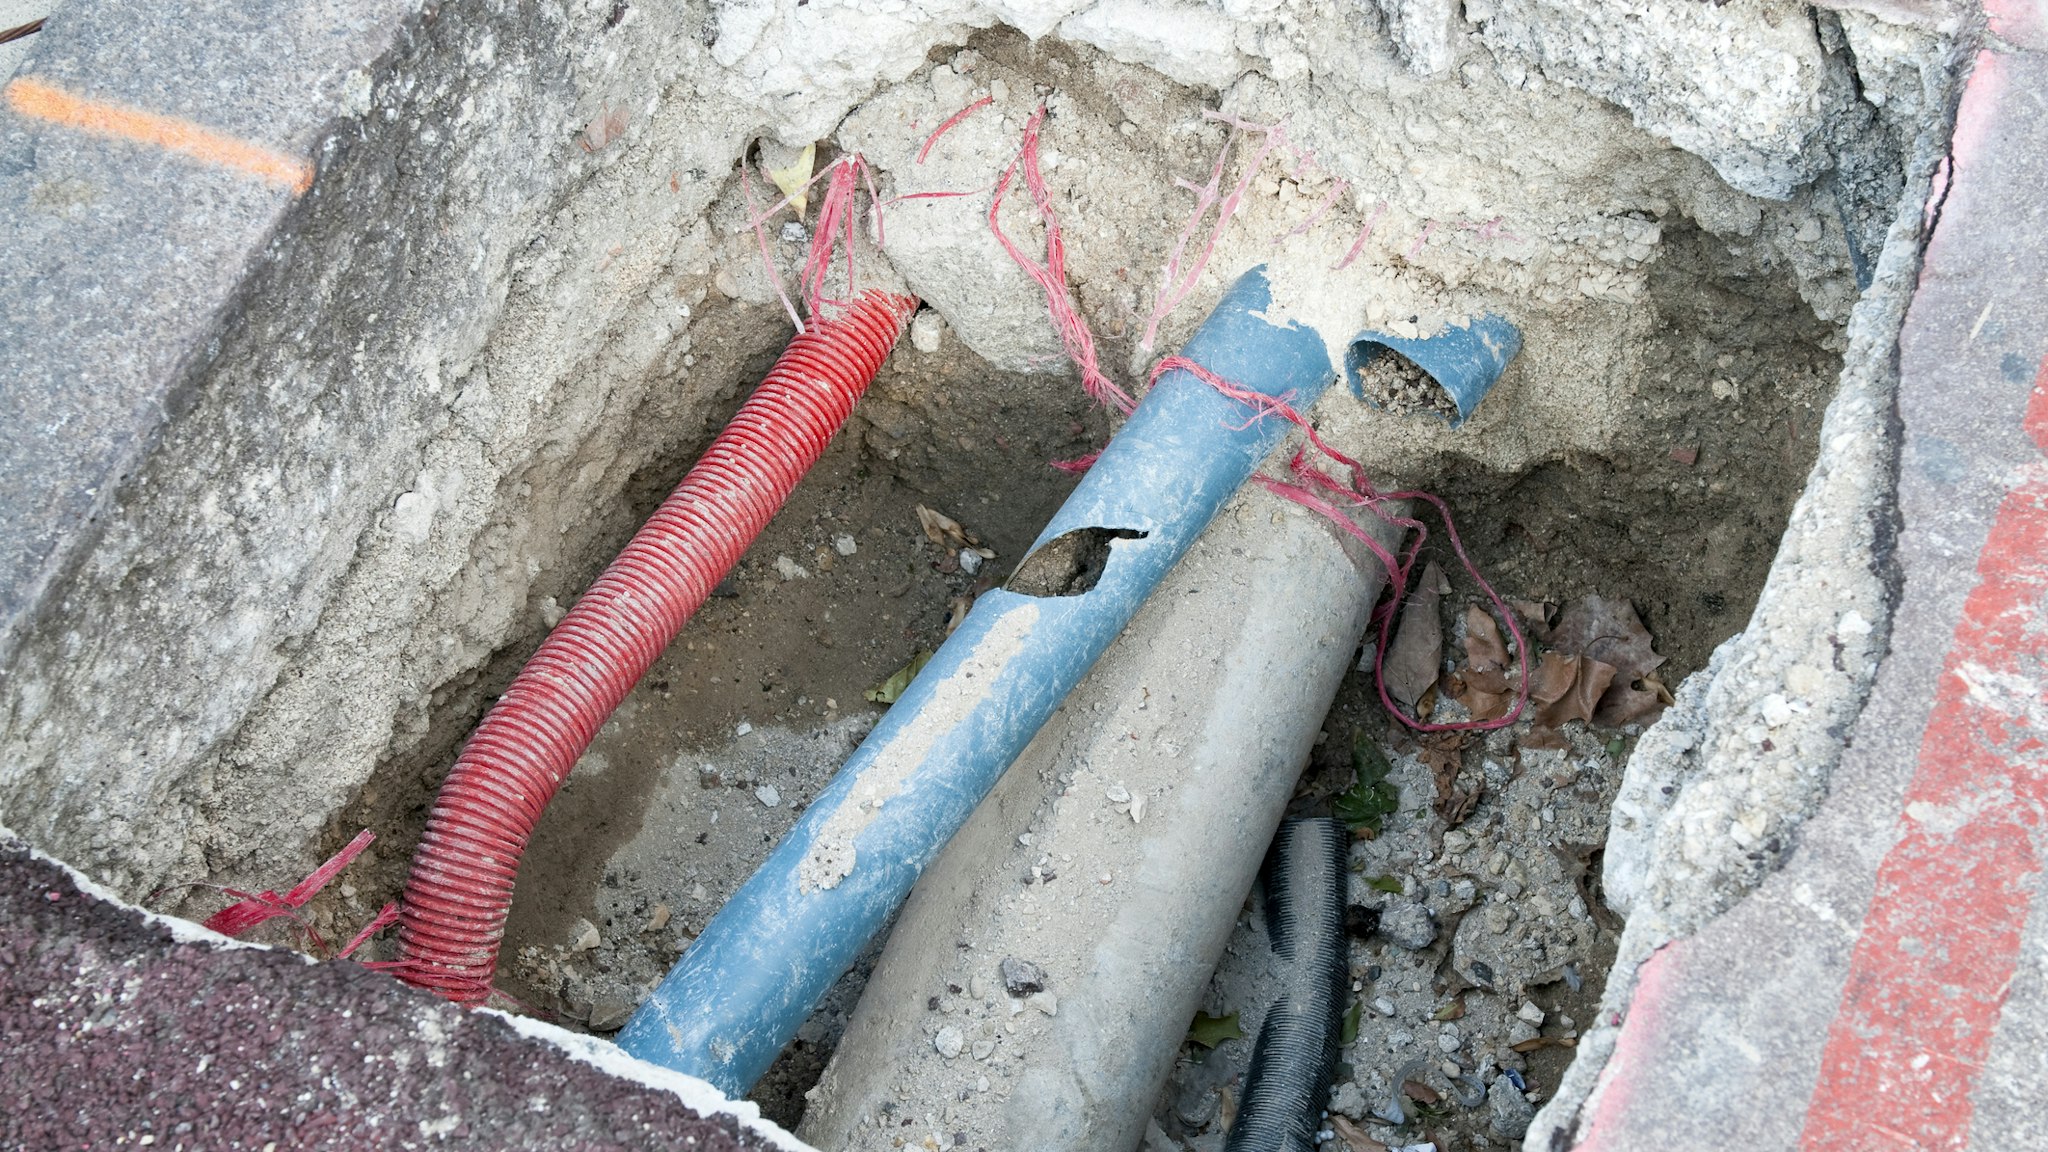 A public utility pipe needing repair work.